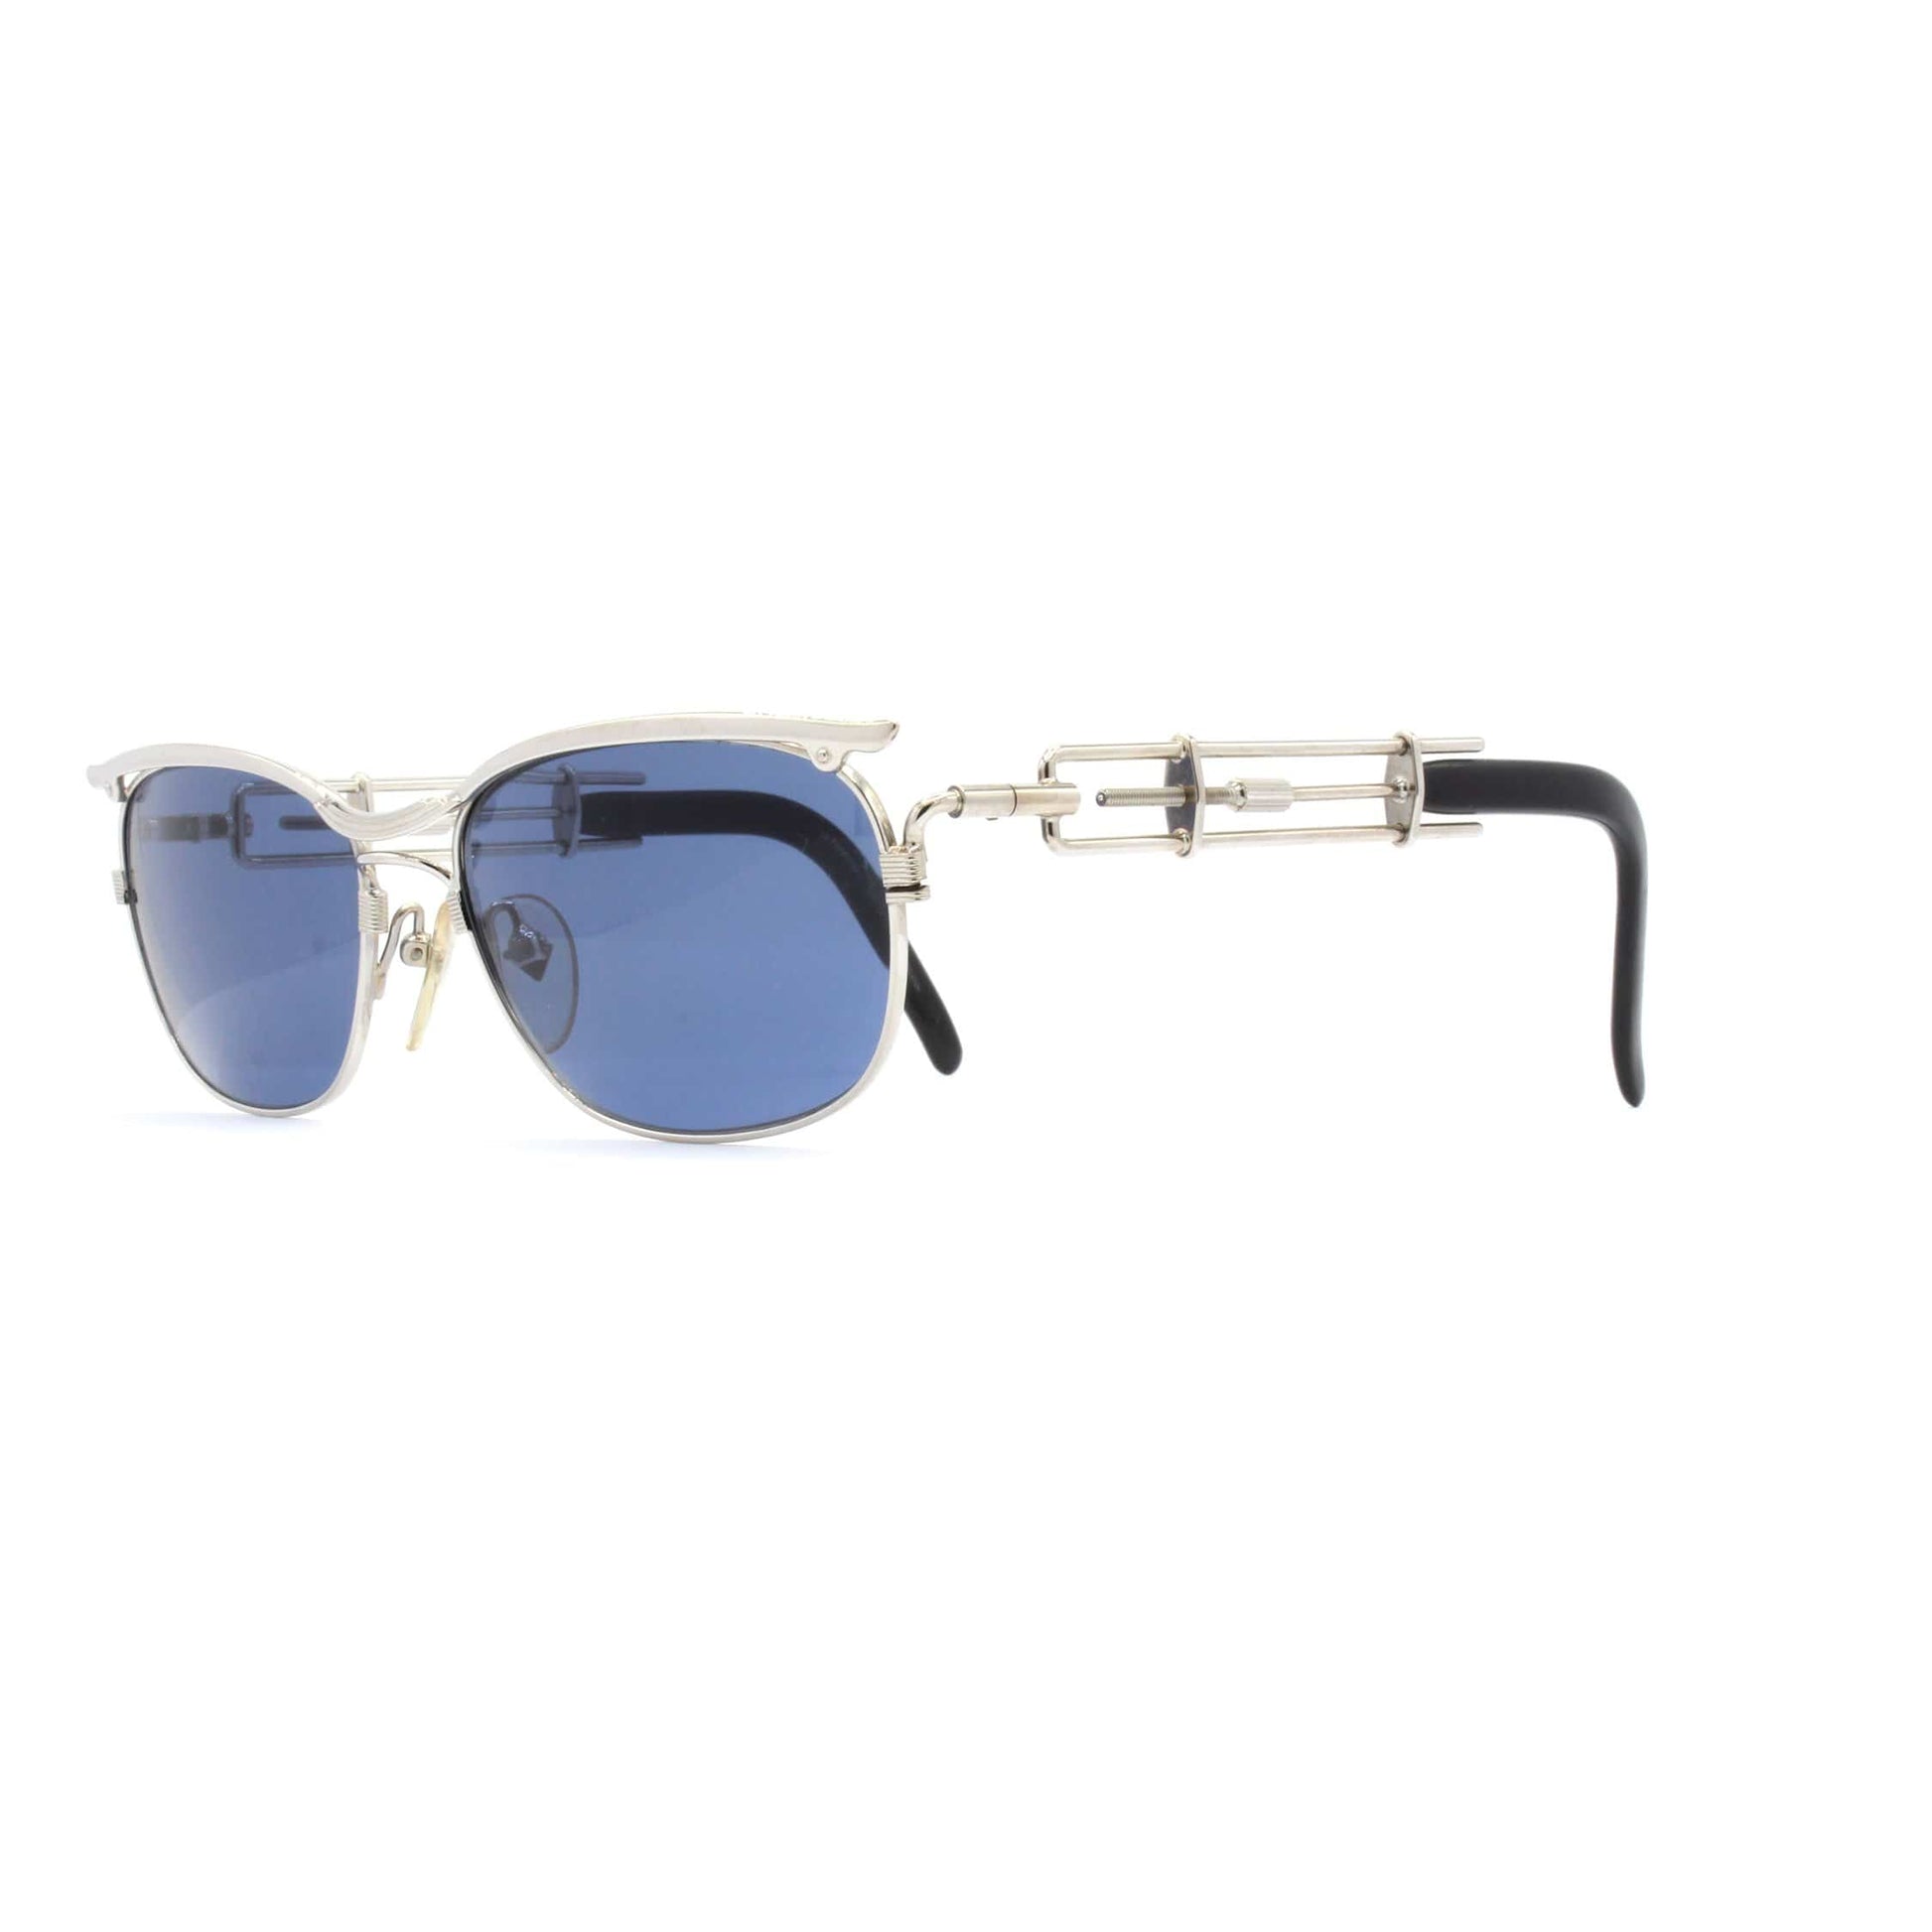 Silver Vintage Jean Paul Gaultier 56-4171 Sunglasses RSTKD Vintage